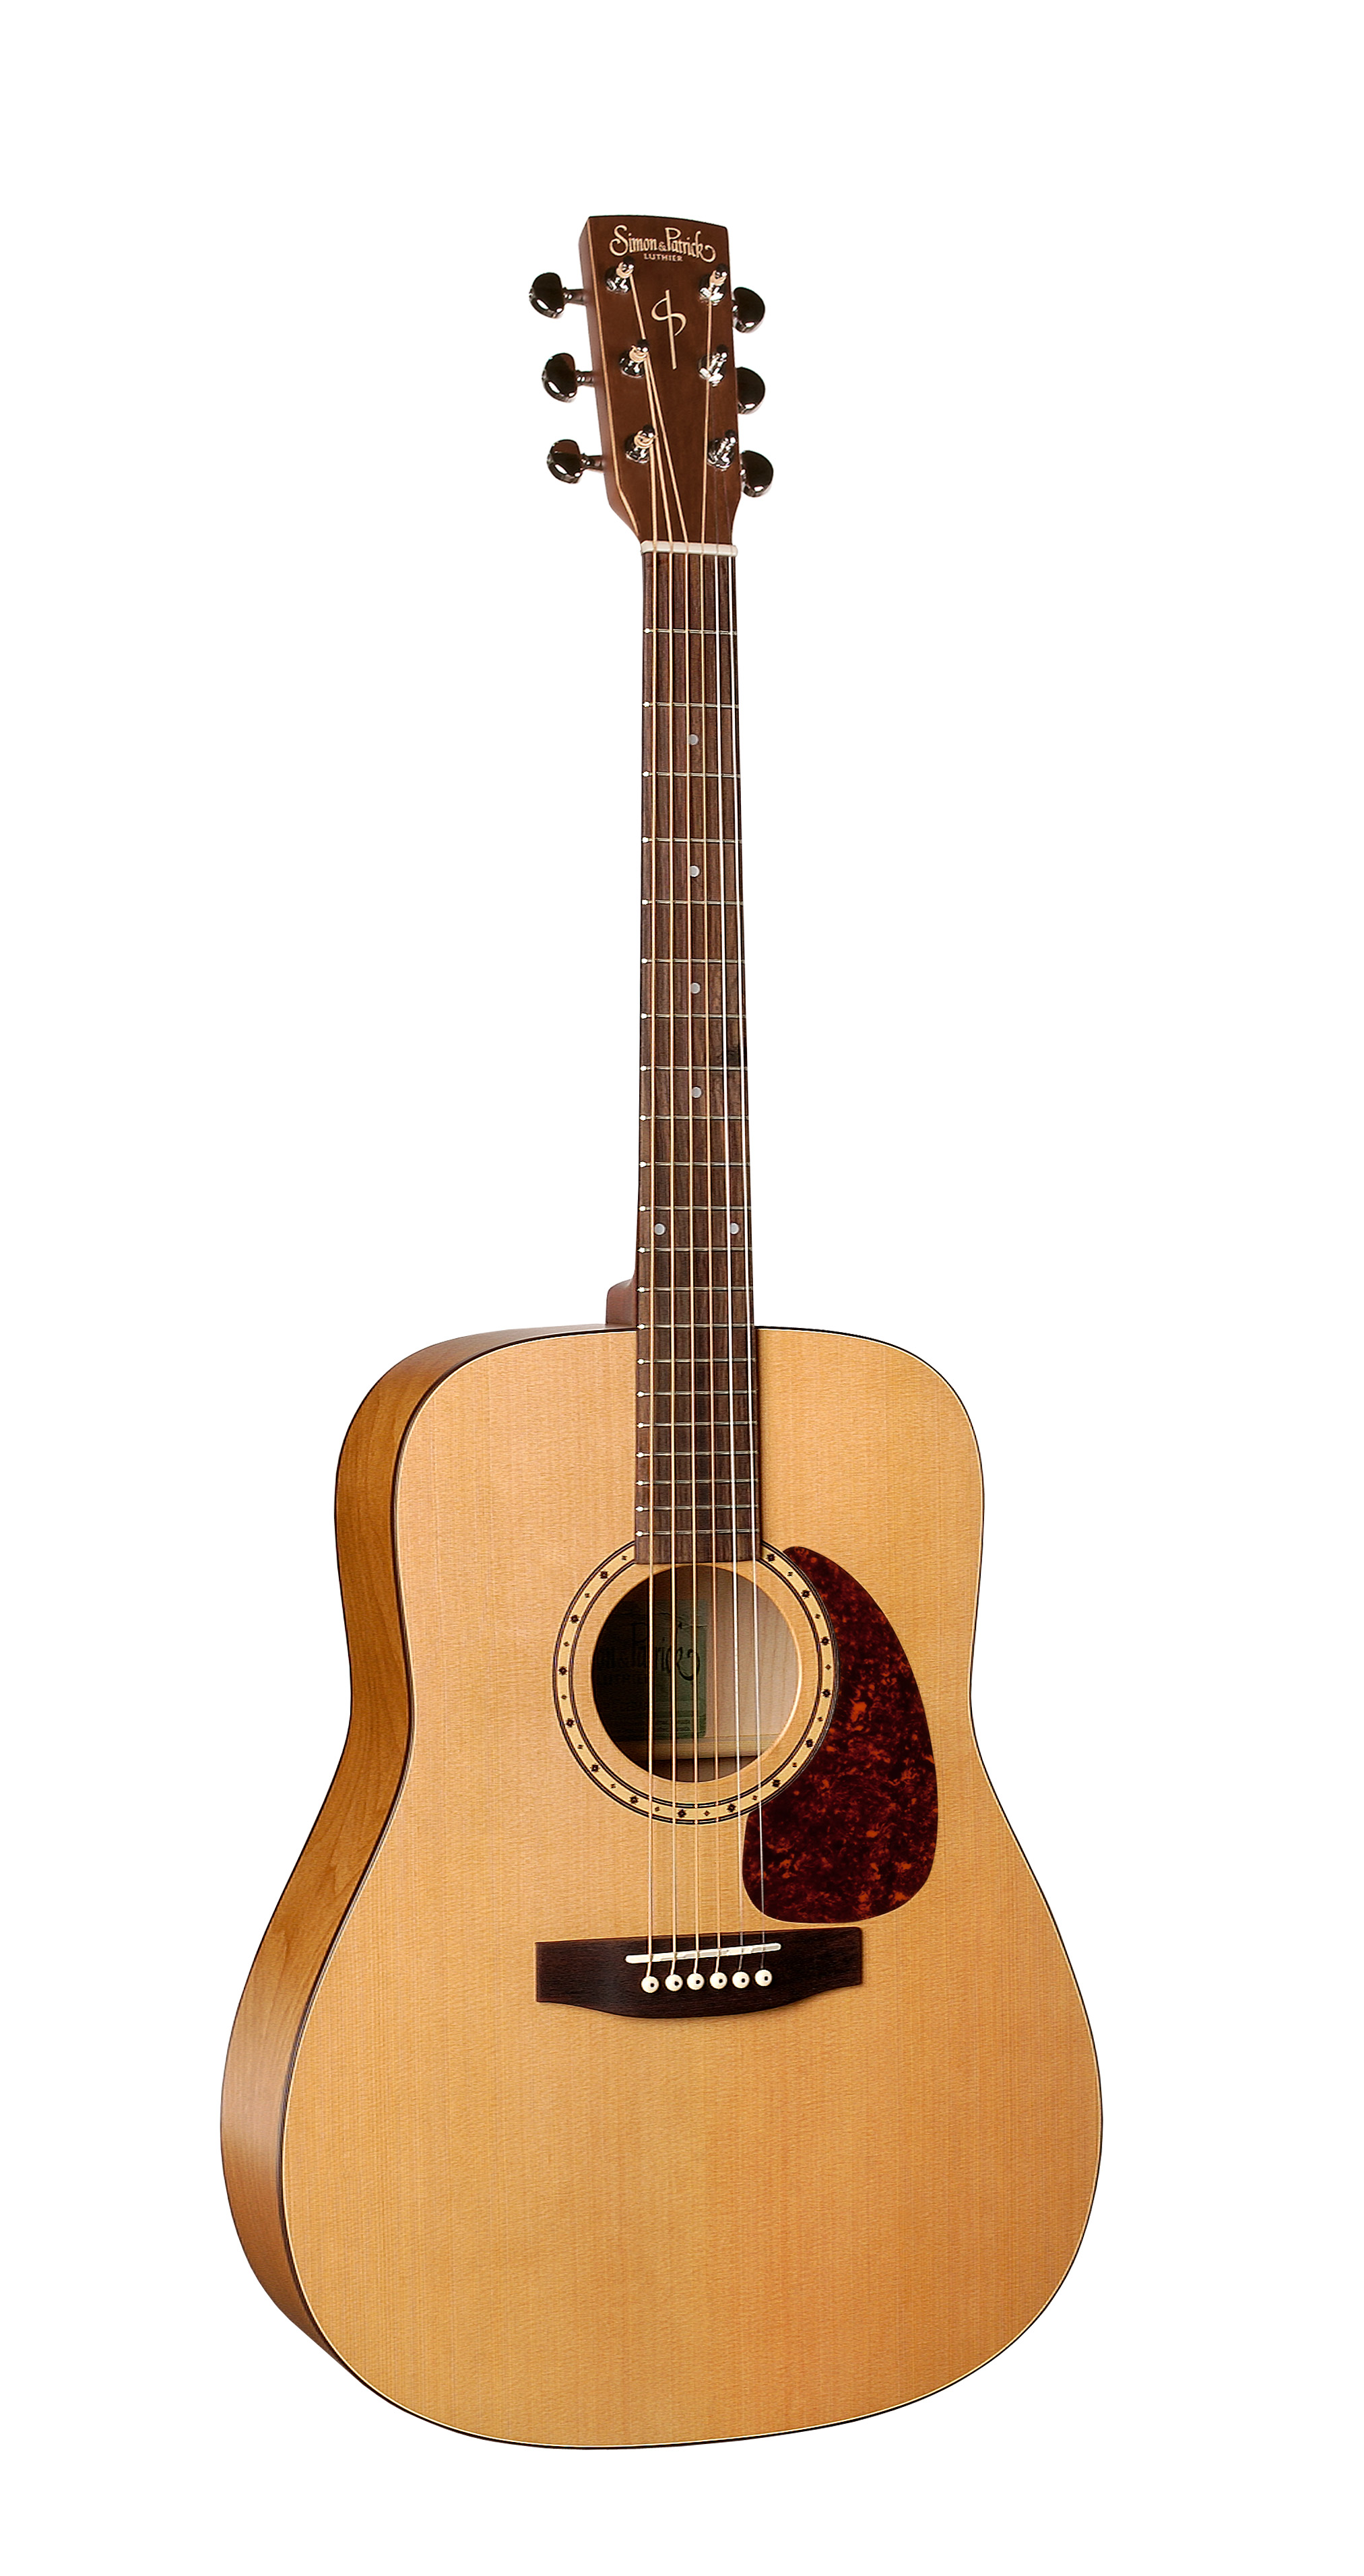 Simon & Patrick 28955 Woodland Cedar Dreadnought Acoustic Guitar